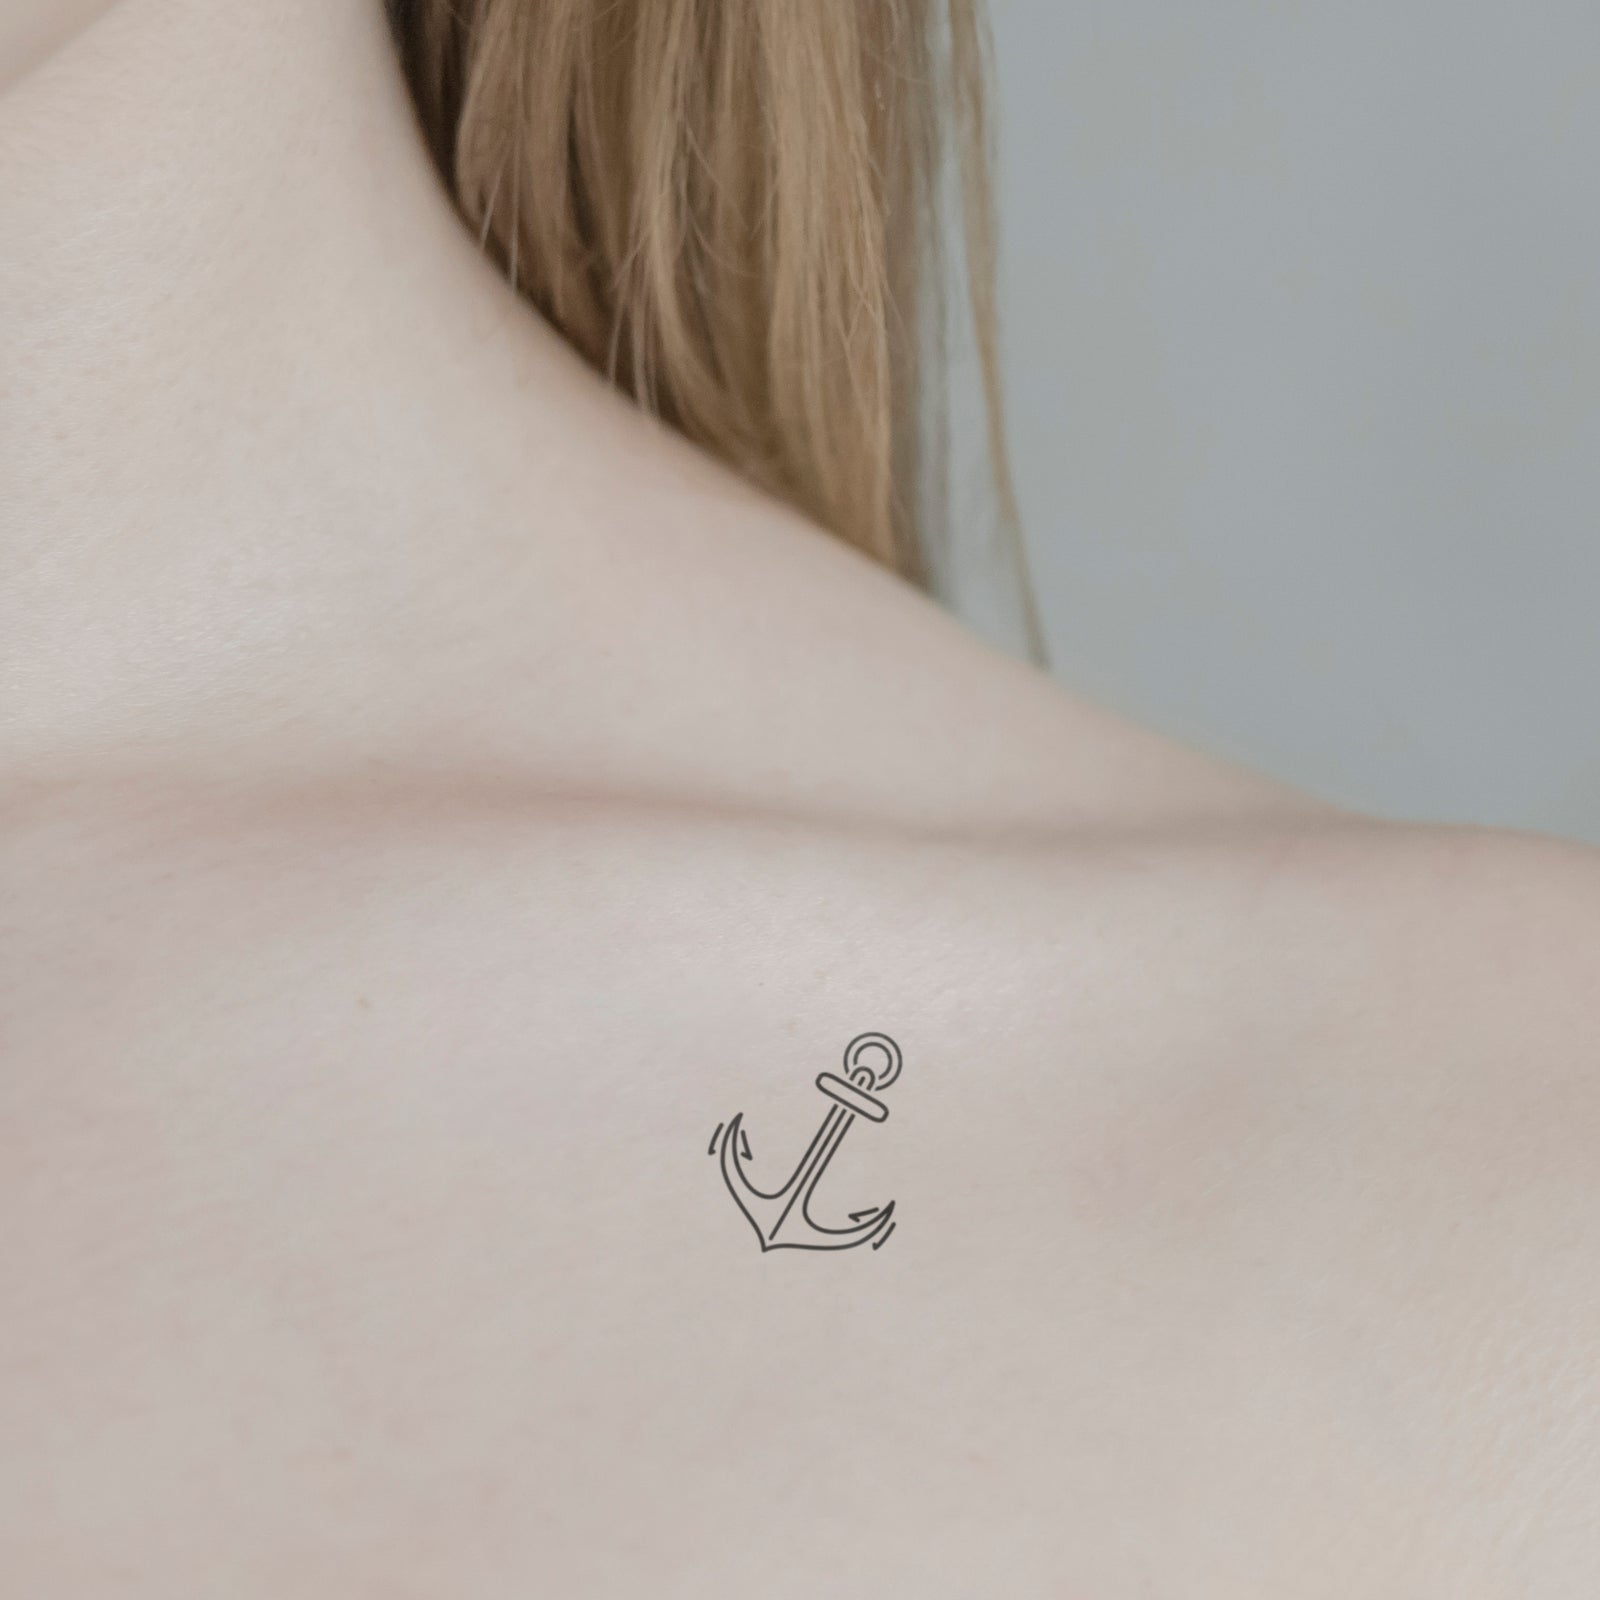 Anchor Tattoo - simple and back of neck placement | Tatuagem mulher, Tatoo,  Tatuagem